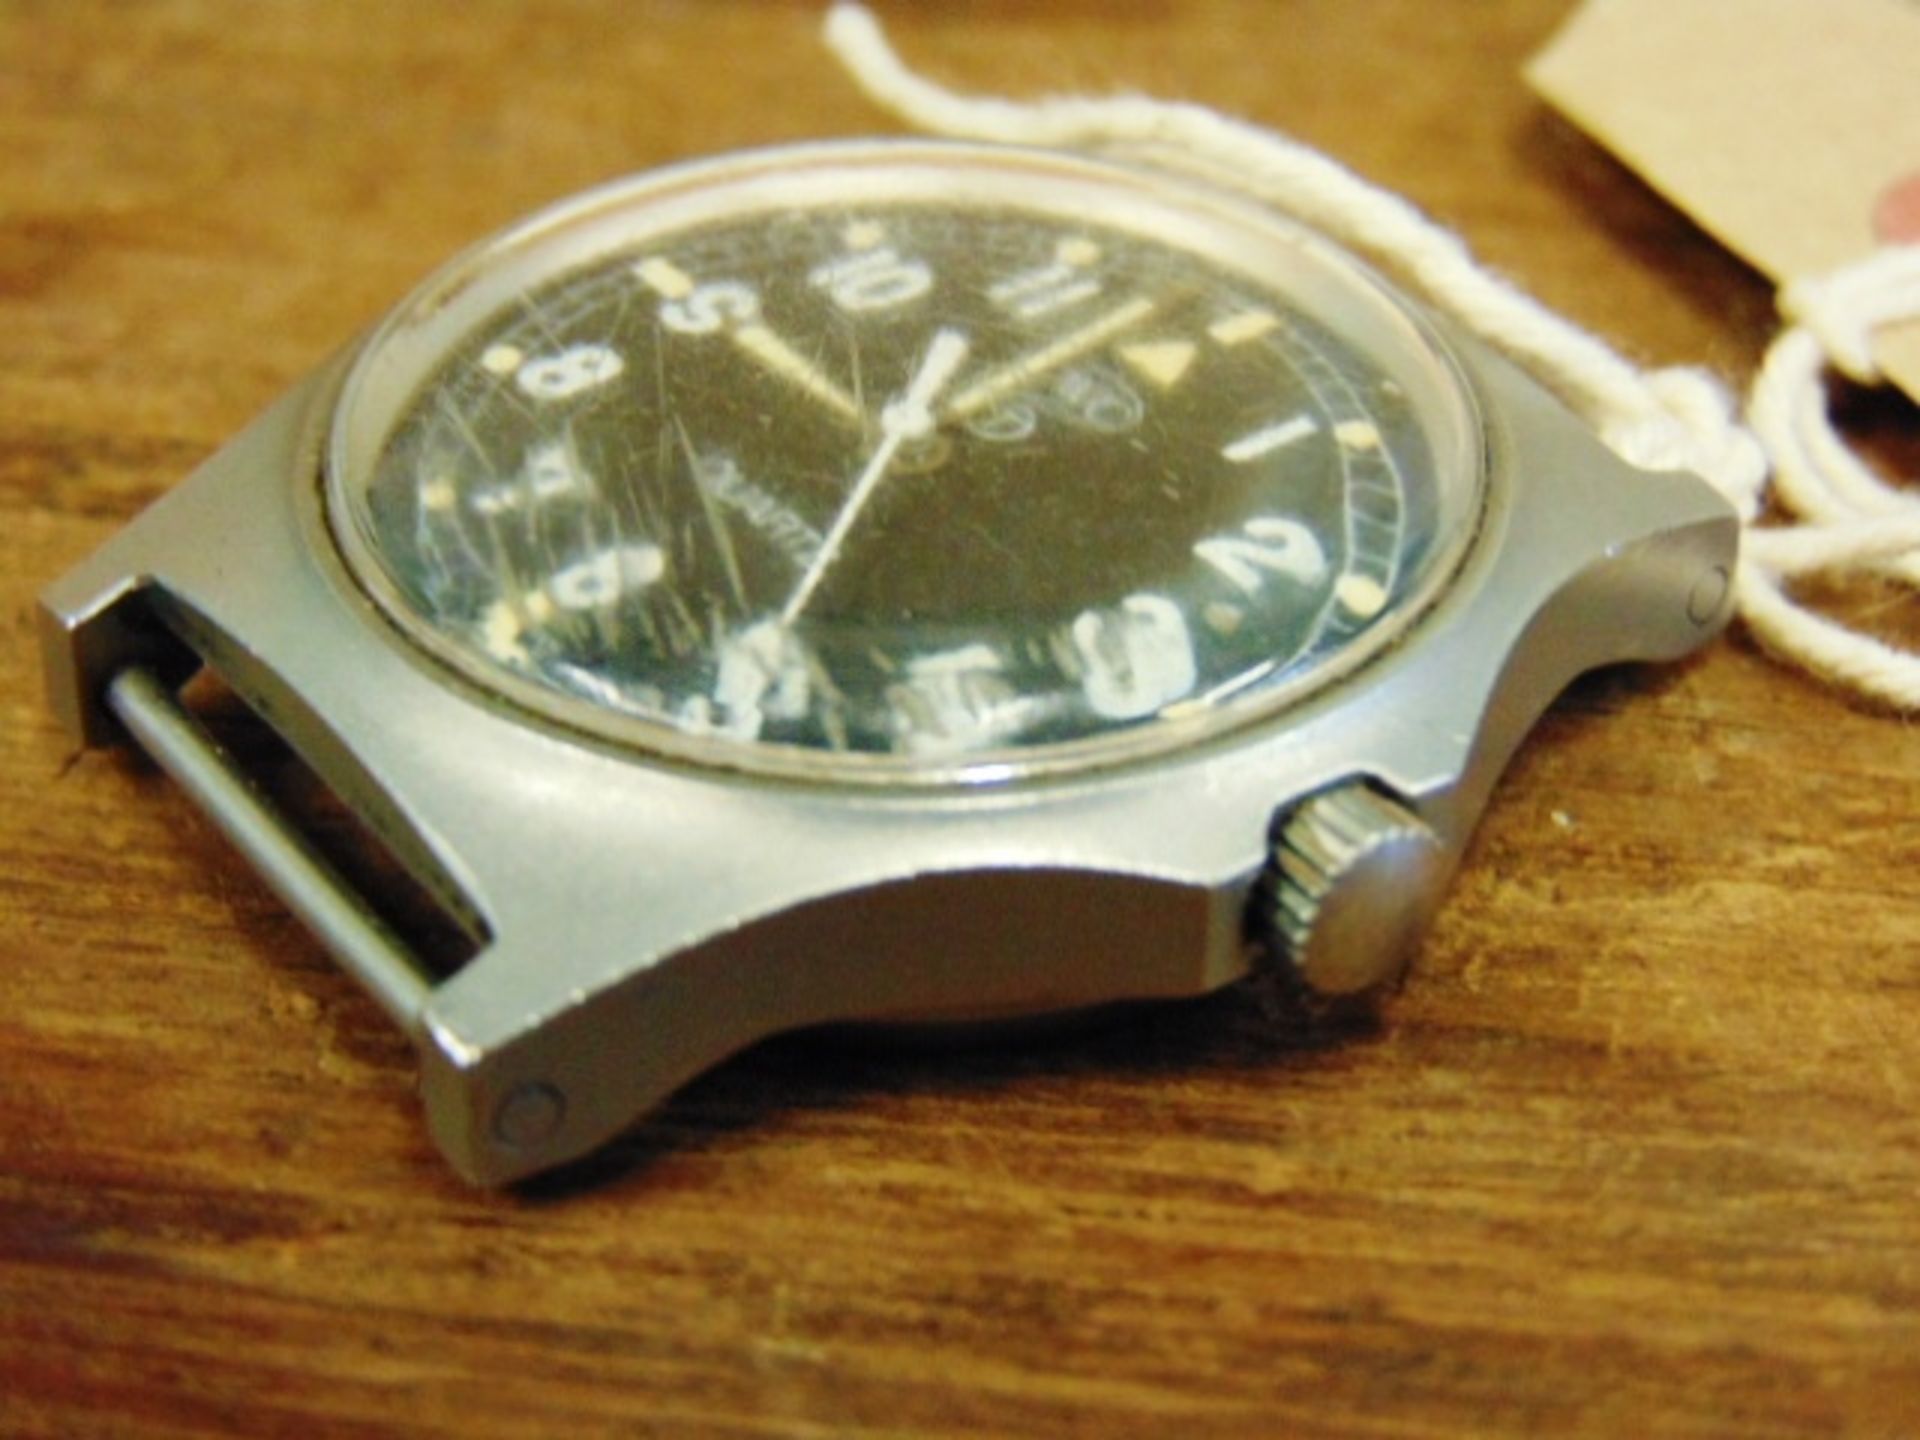 CWC (Fat Boy/Fat Case) quartz wrist watch - Image 3 of 4